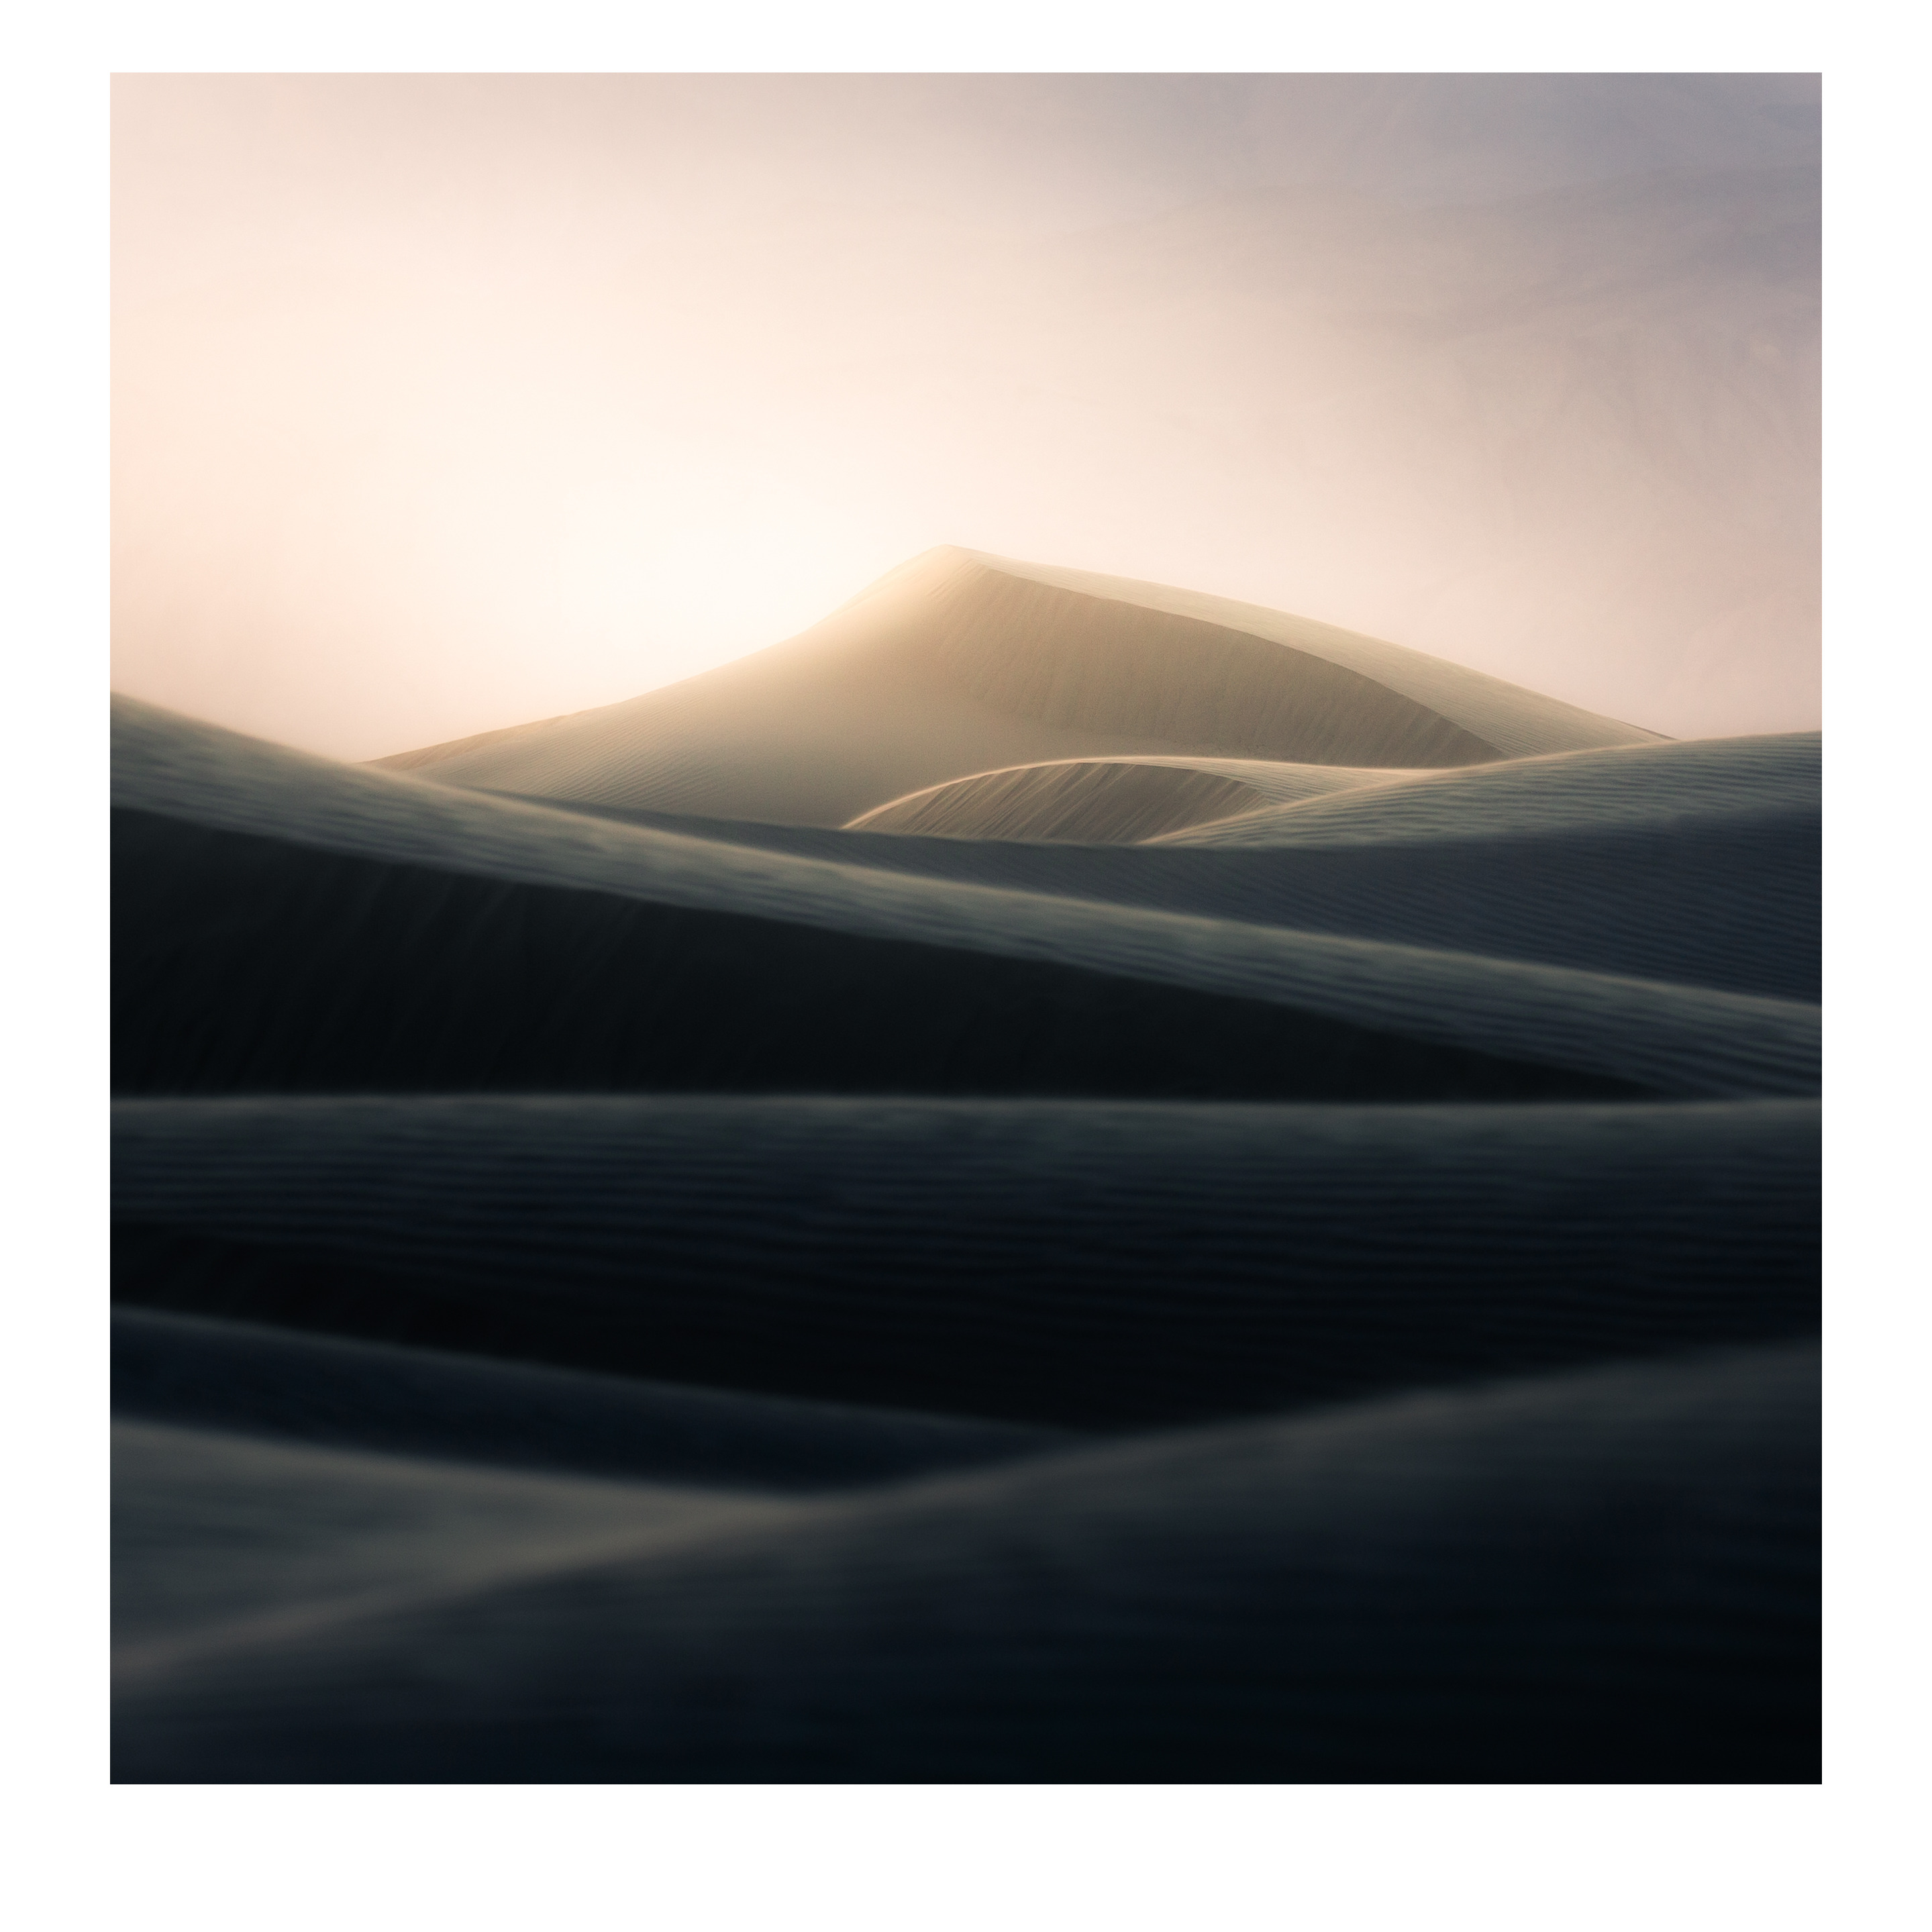 Death valley sand dunes sunset 1x1 2551 x 2551 6a4a3591 edit leborder a5wz0e